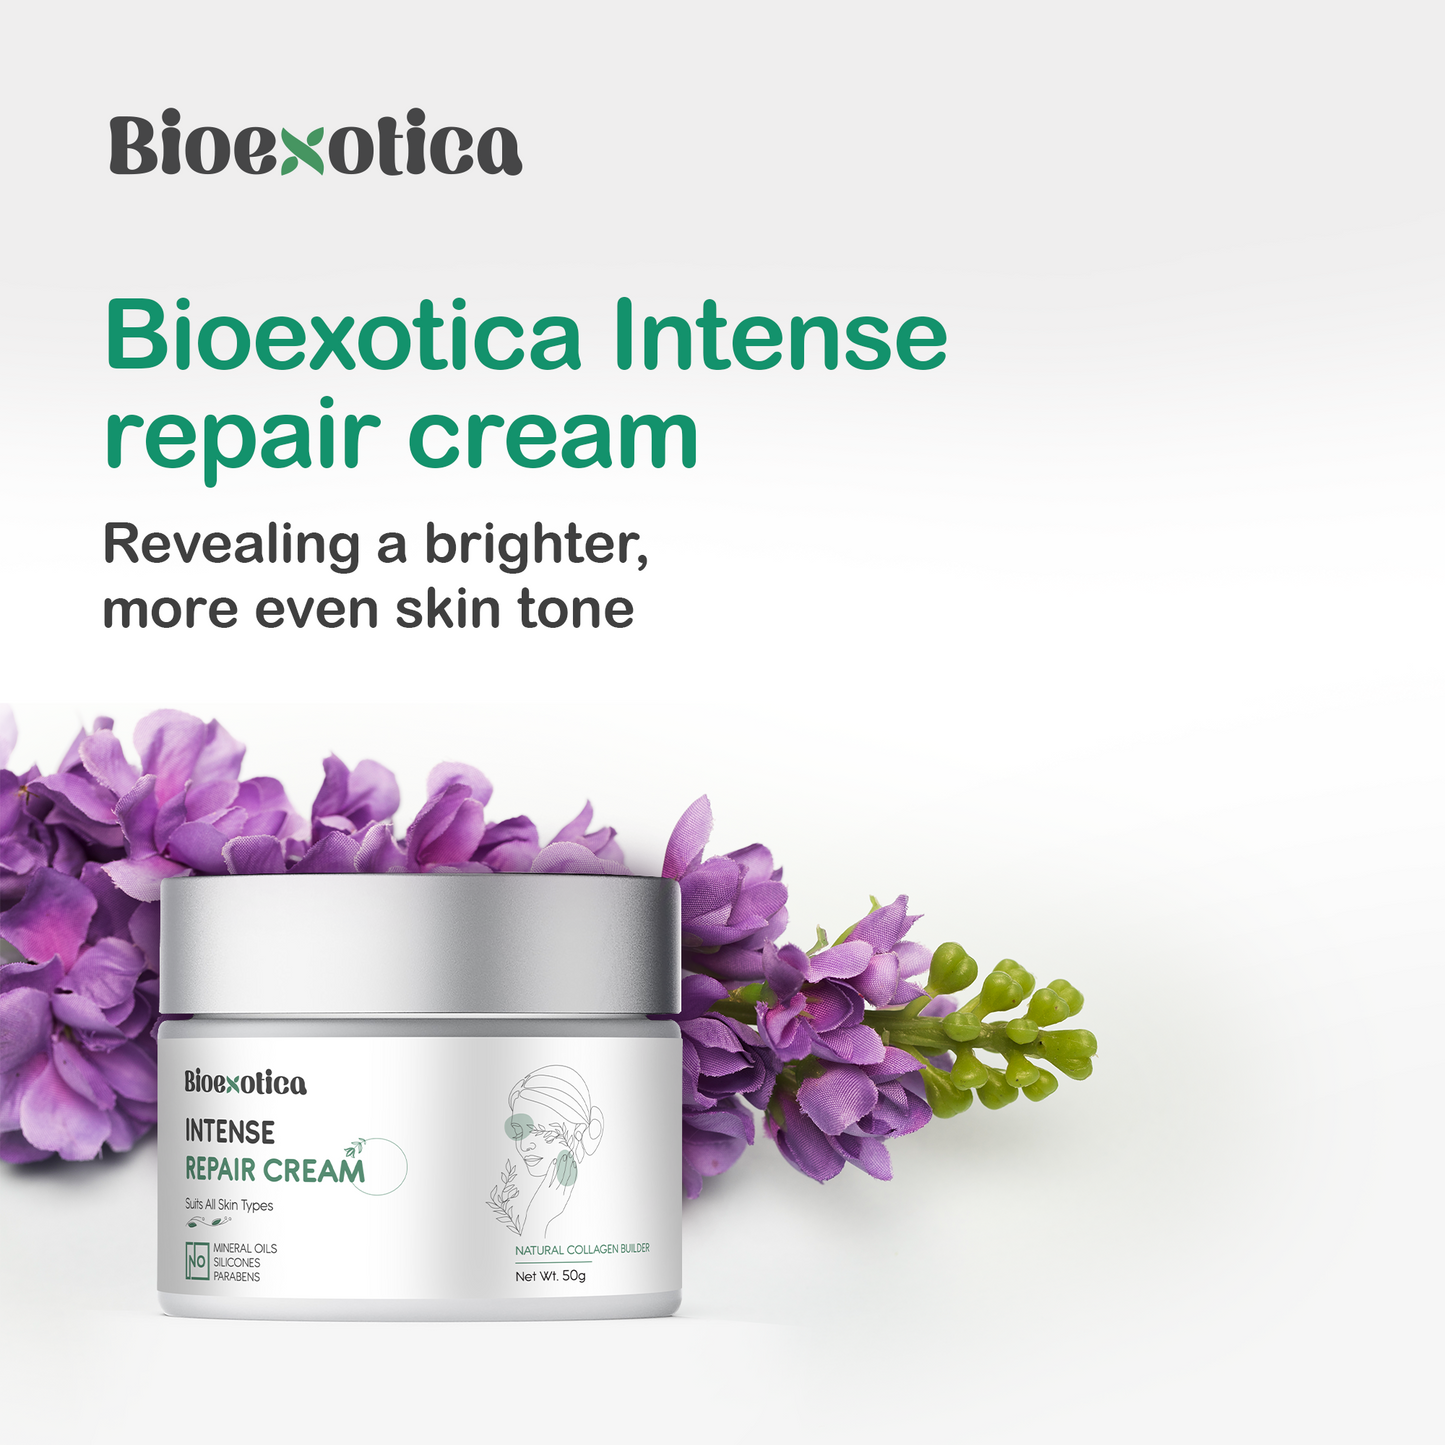 BIOEXOTICA INTENSE REPAIR CREAM: A Revolutionary Approach to Skincare